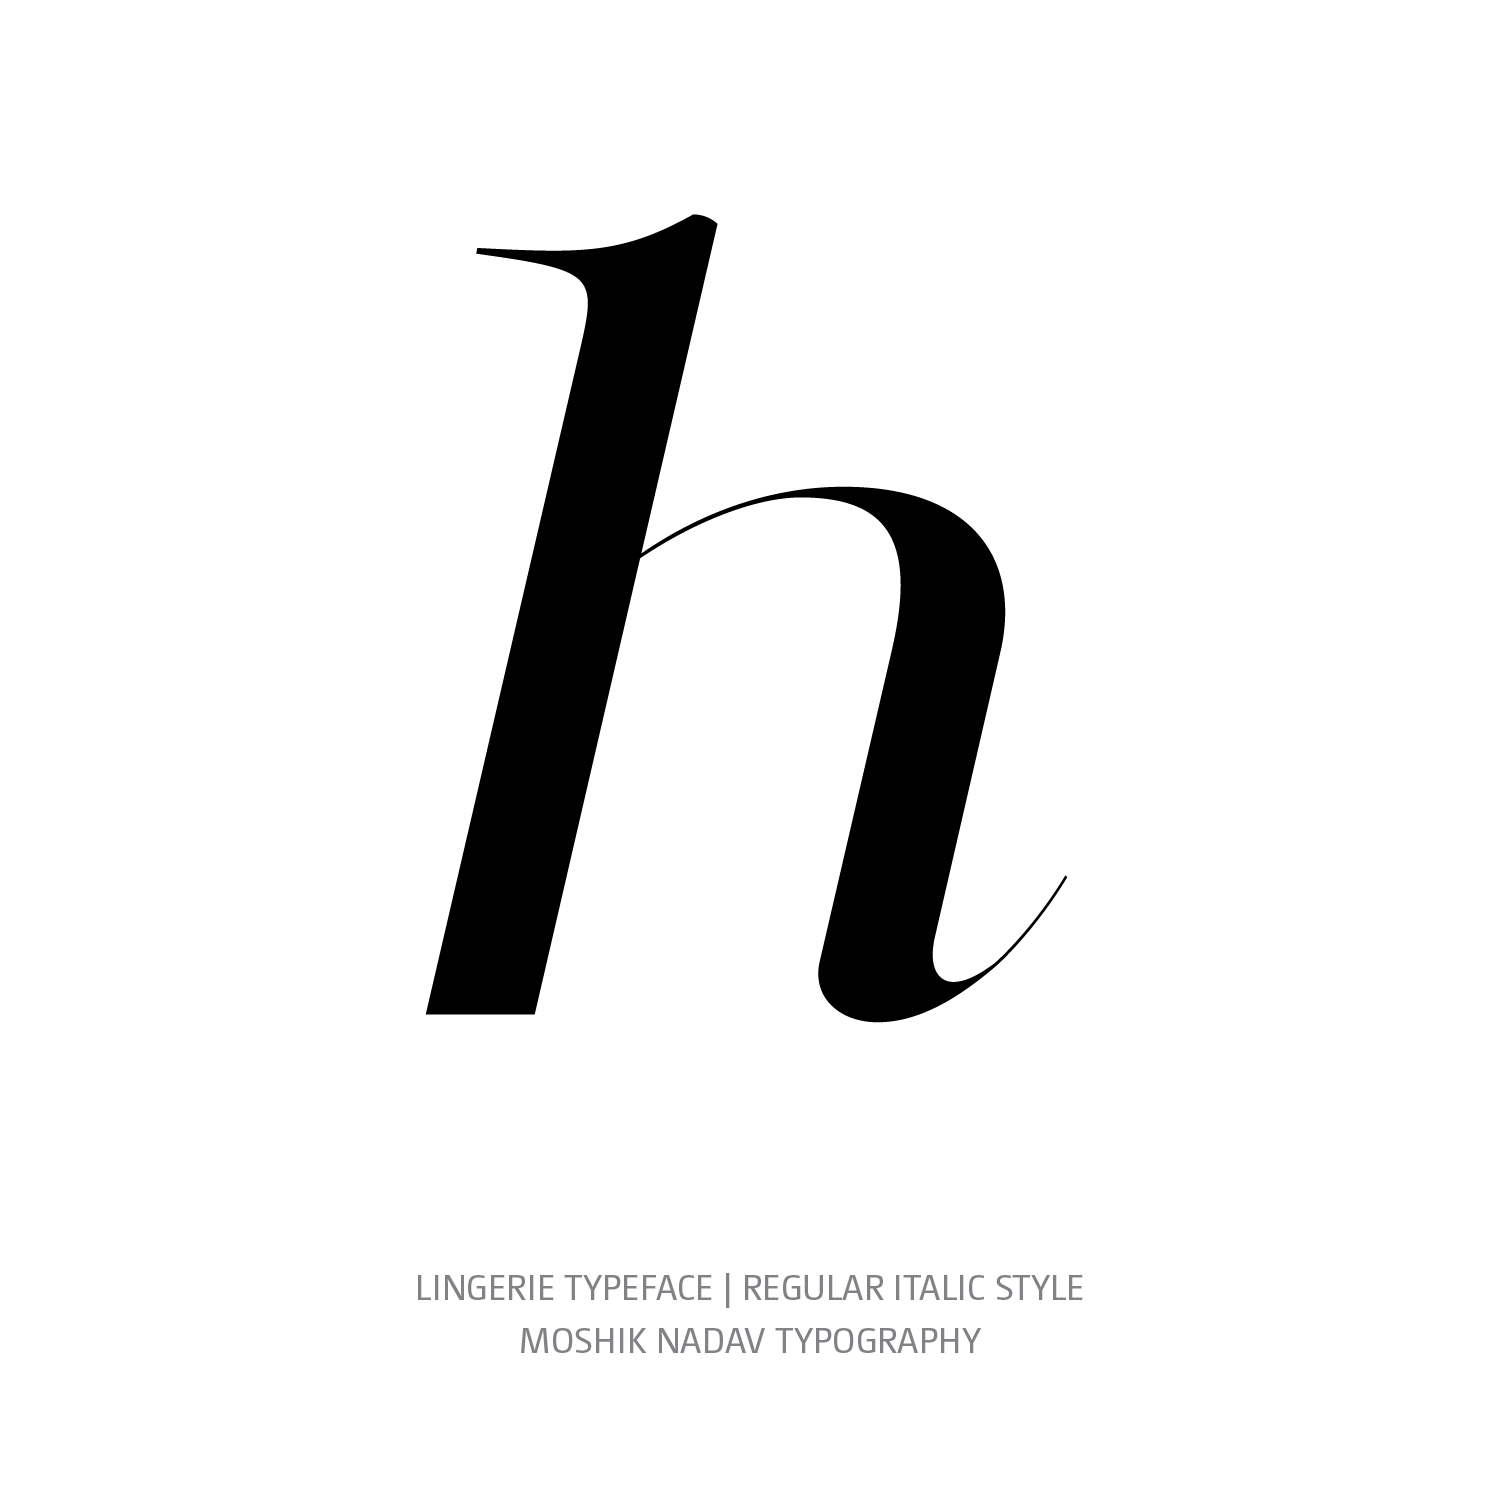 Lingerie Typeface Regular Italic h - Fashion fonts by Moshik Nadav Typography